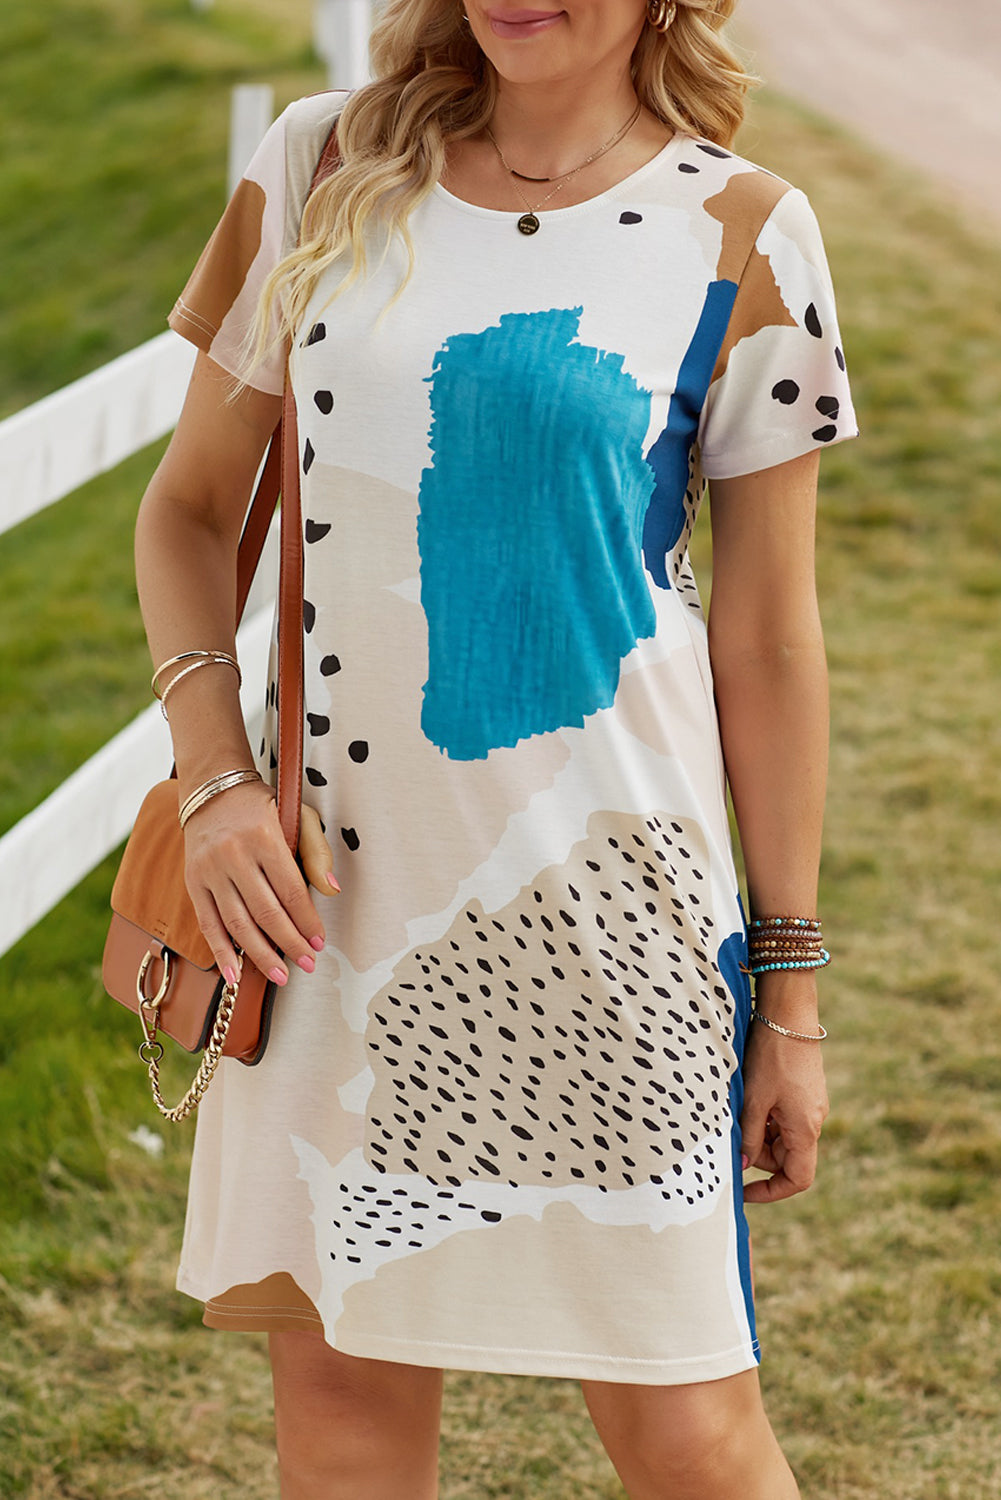 Light Blue Leopard Splicing Color Block Mini Dress